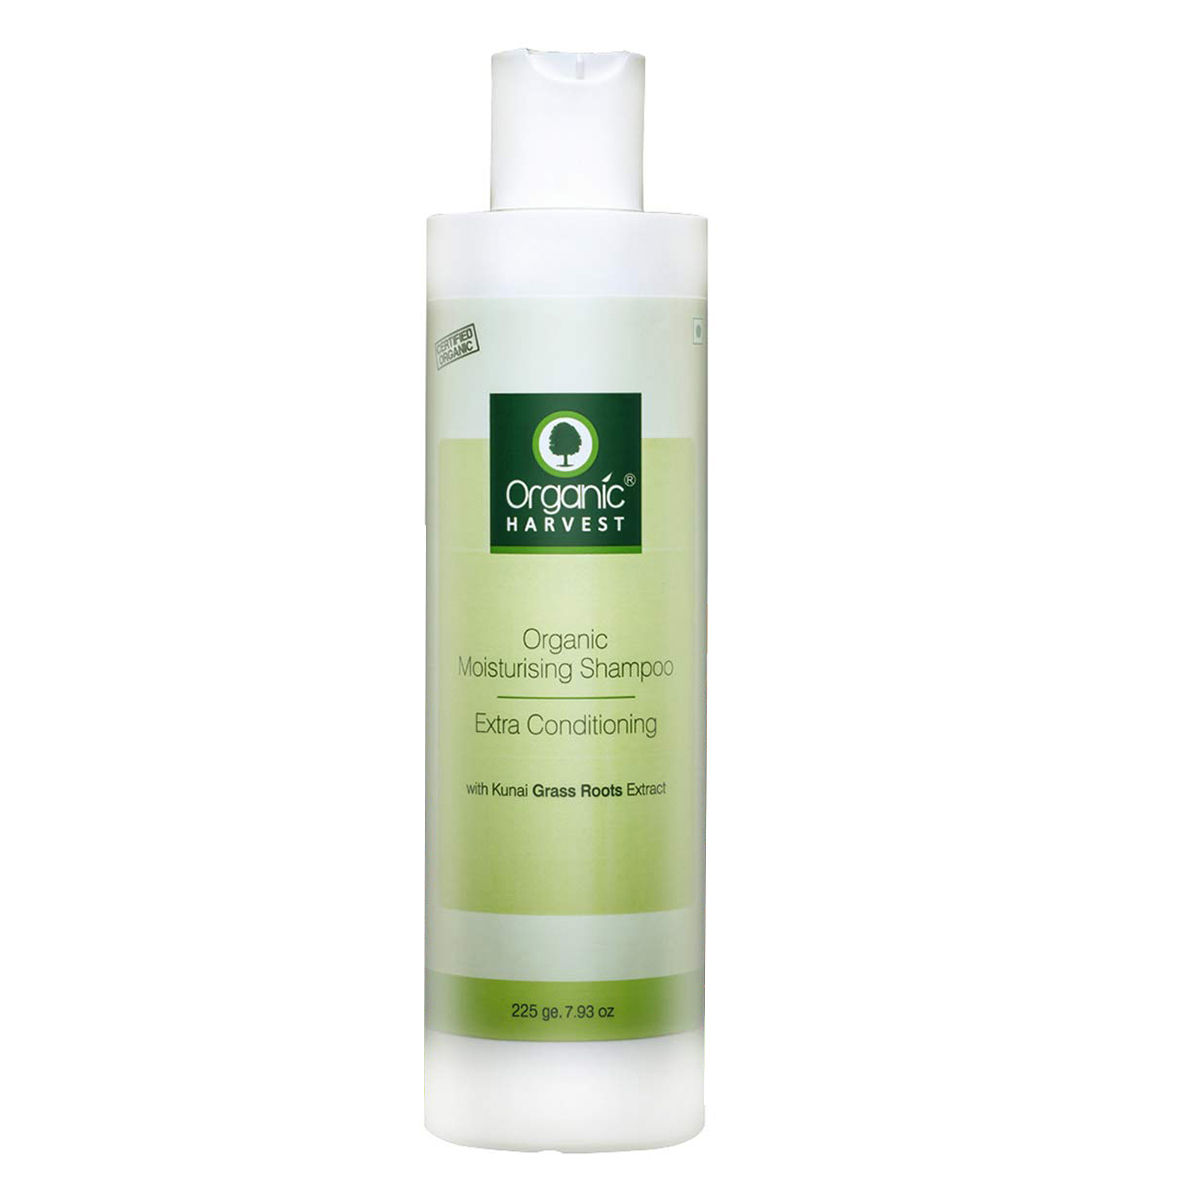 Buy Organic Harvest Extra Conditioning Moisturising Shampoo, 225 ml Online